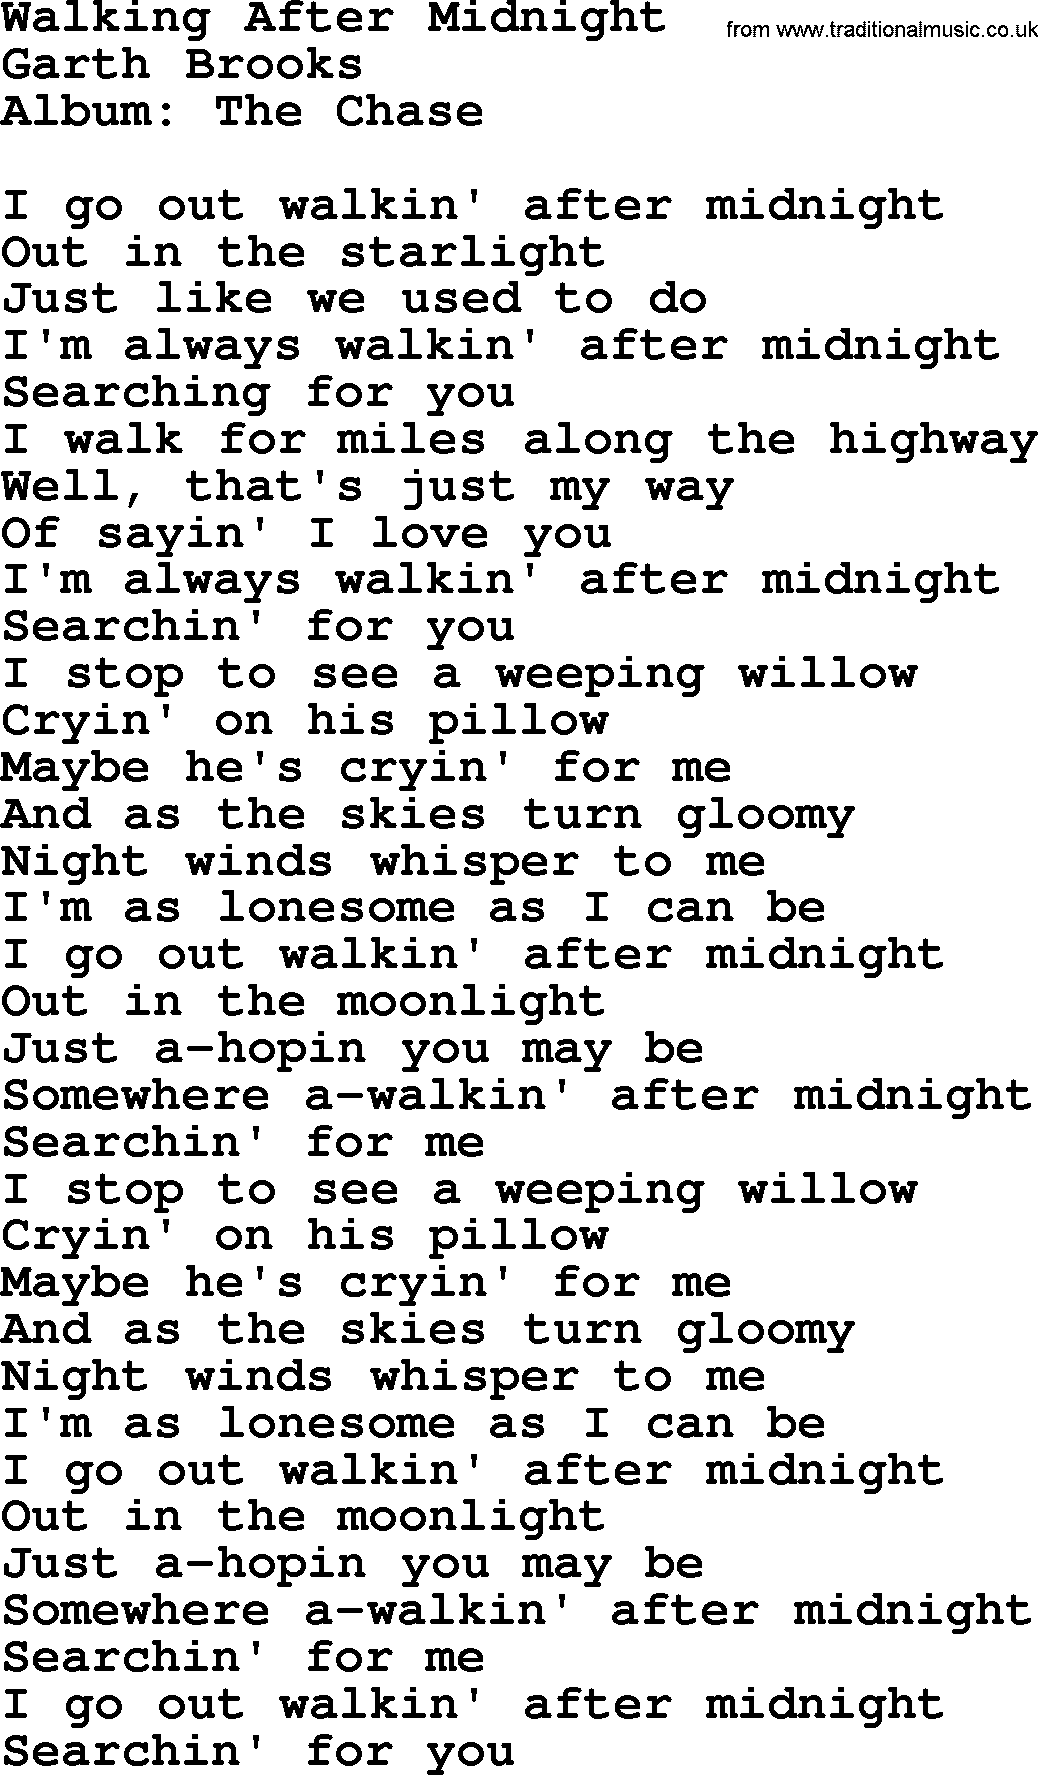 Garth Brooks song: Walking After Midnight, lyrics